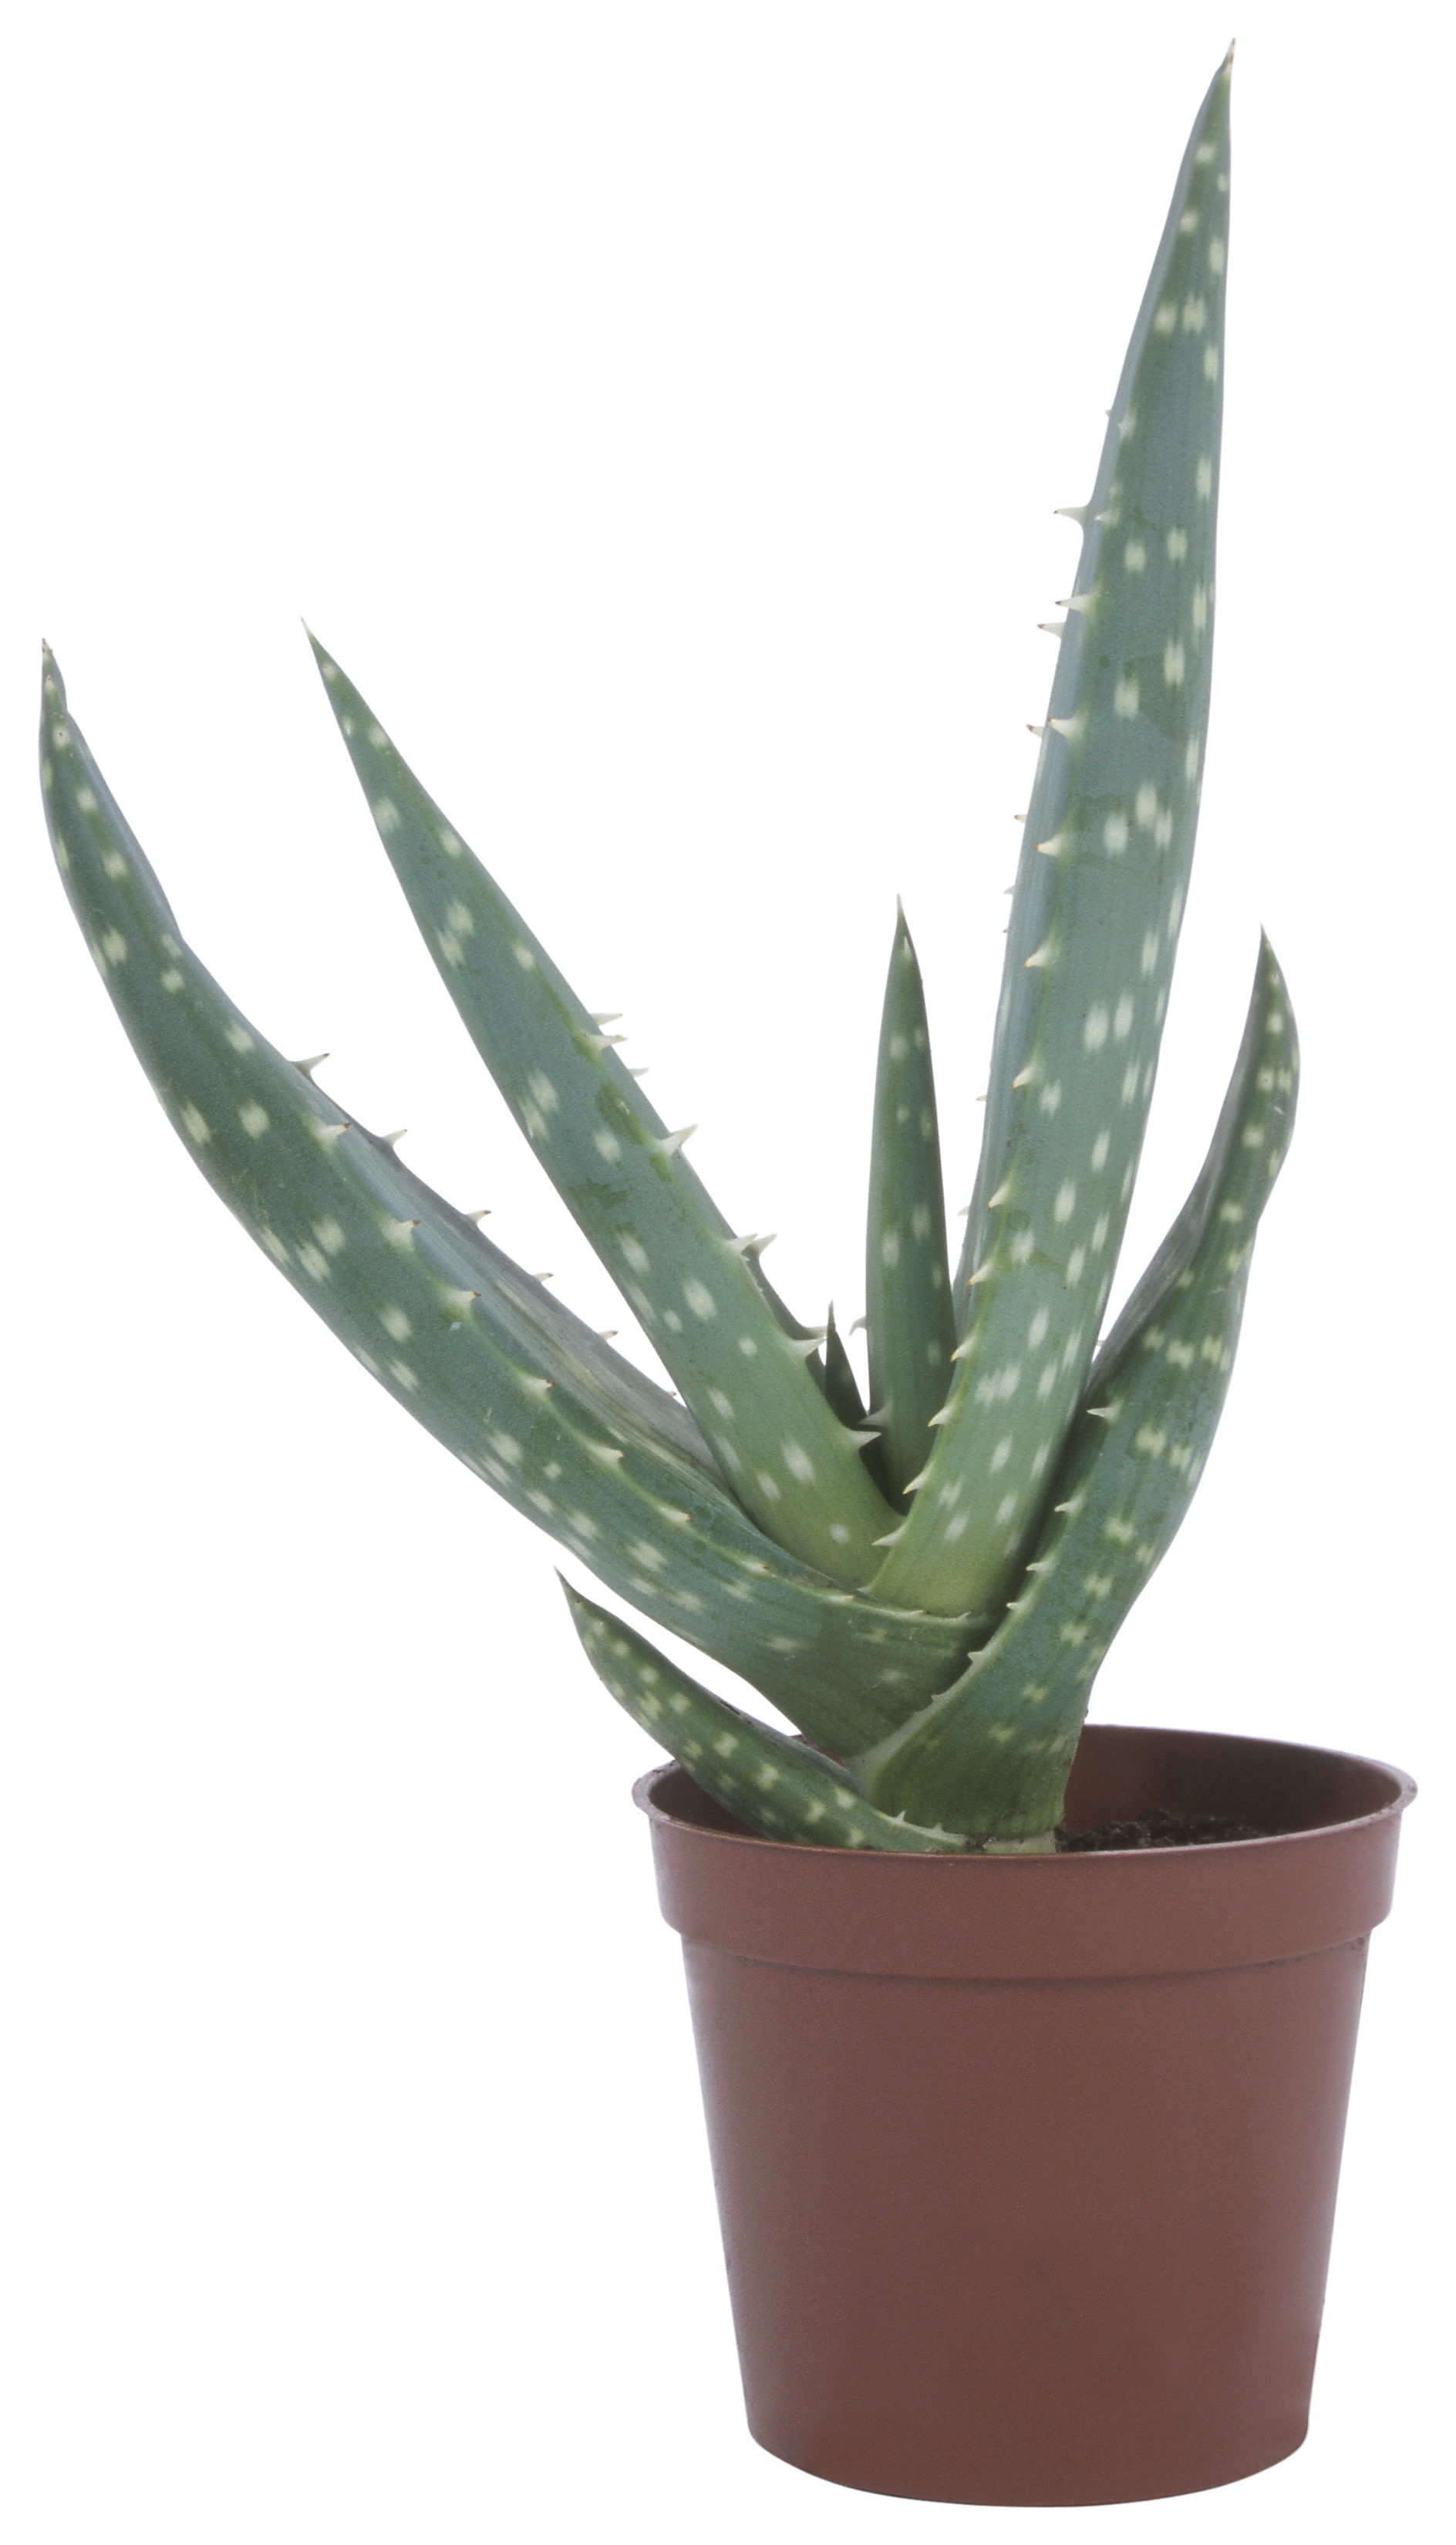 Aloe plant photo